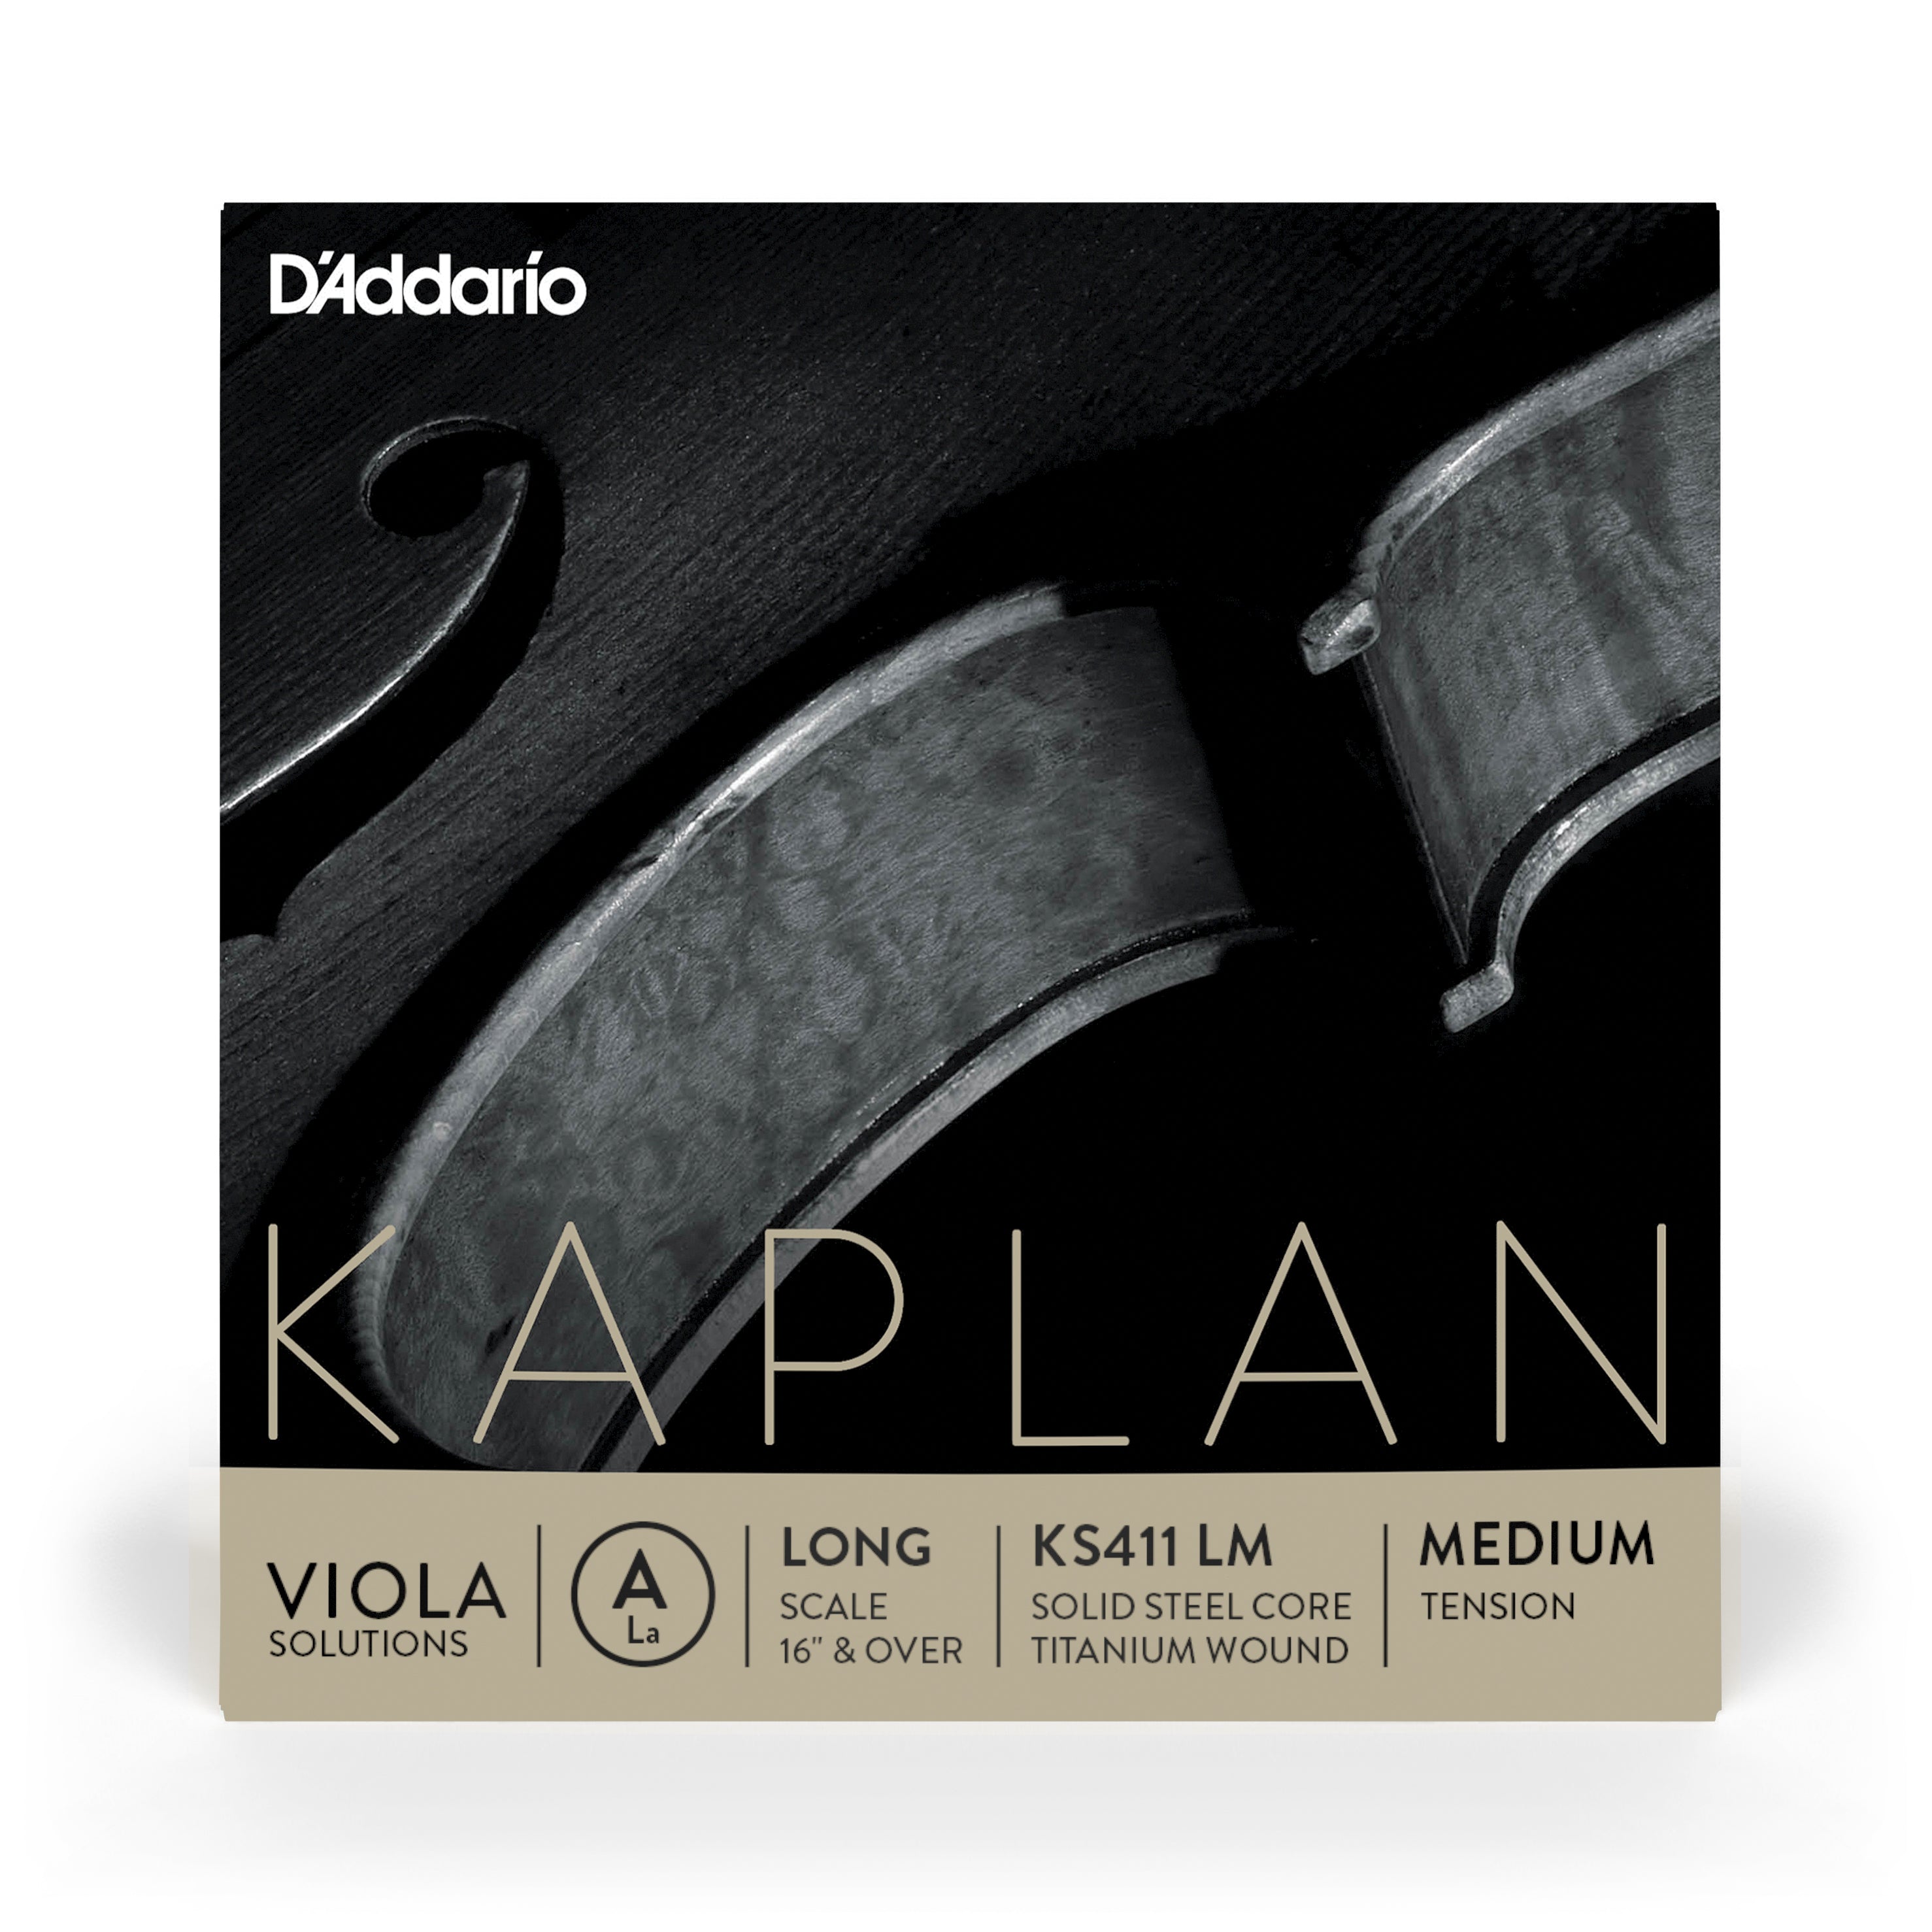 D'Addario Kaplan Solutions Viola Titanium A Long Scale Medium Tension Set